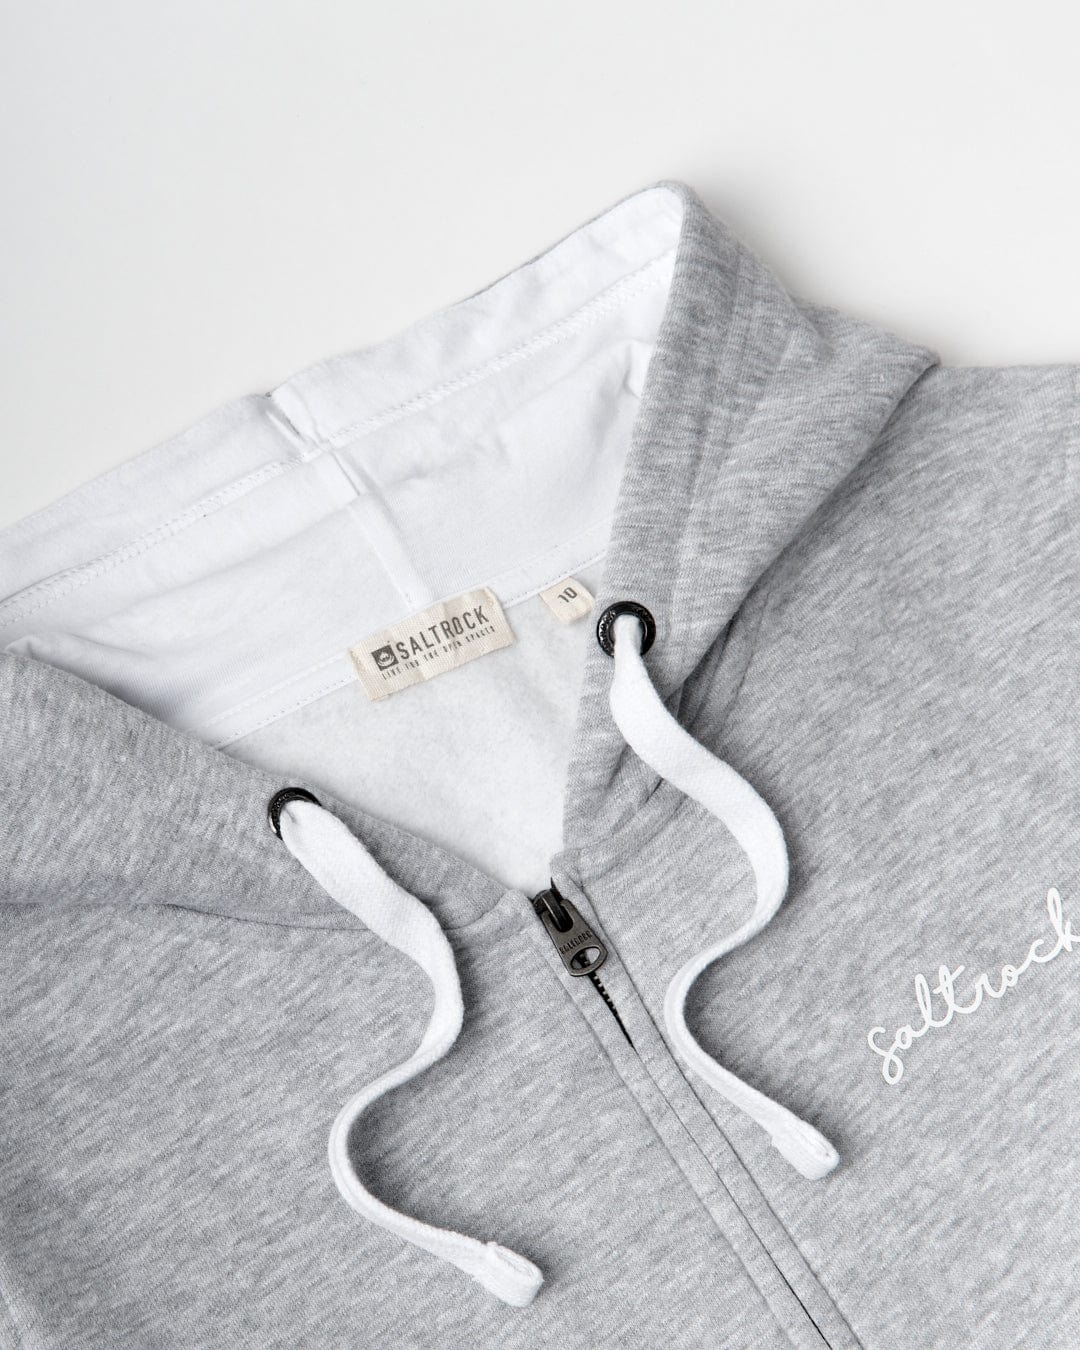 A women's staple wardrobe essential - the Velator Womens Zip Hoodie in Grey featuring Saltrock branding with a white logo.